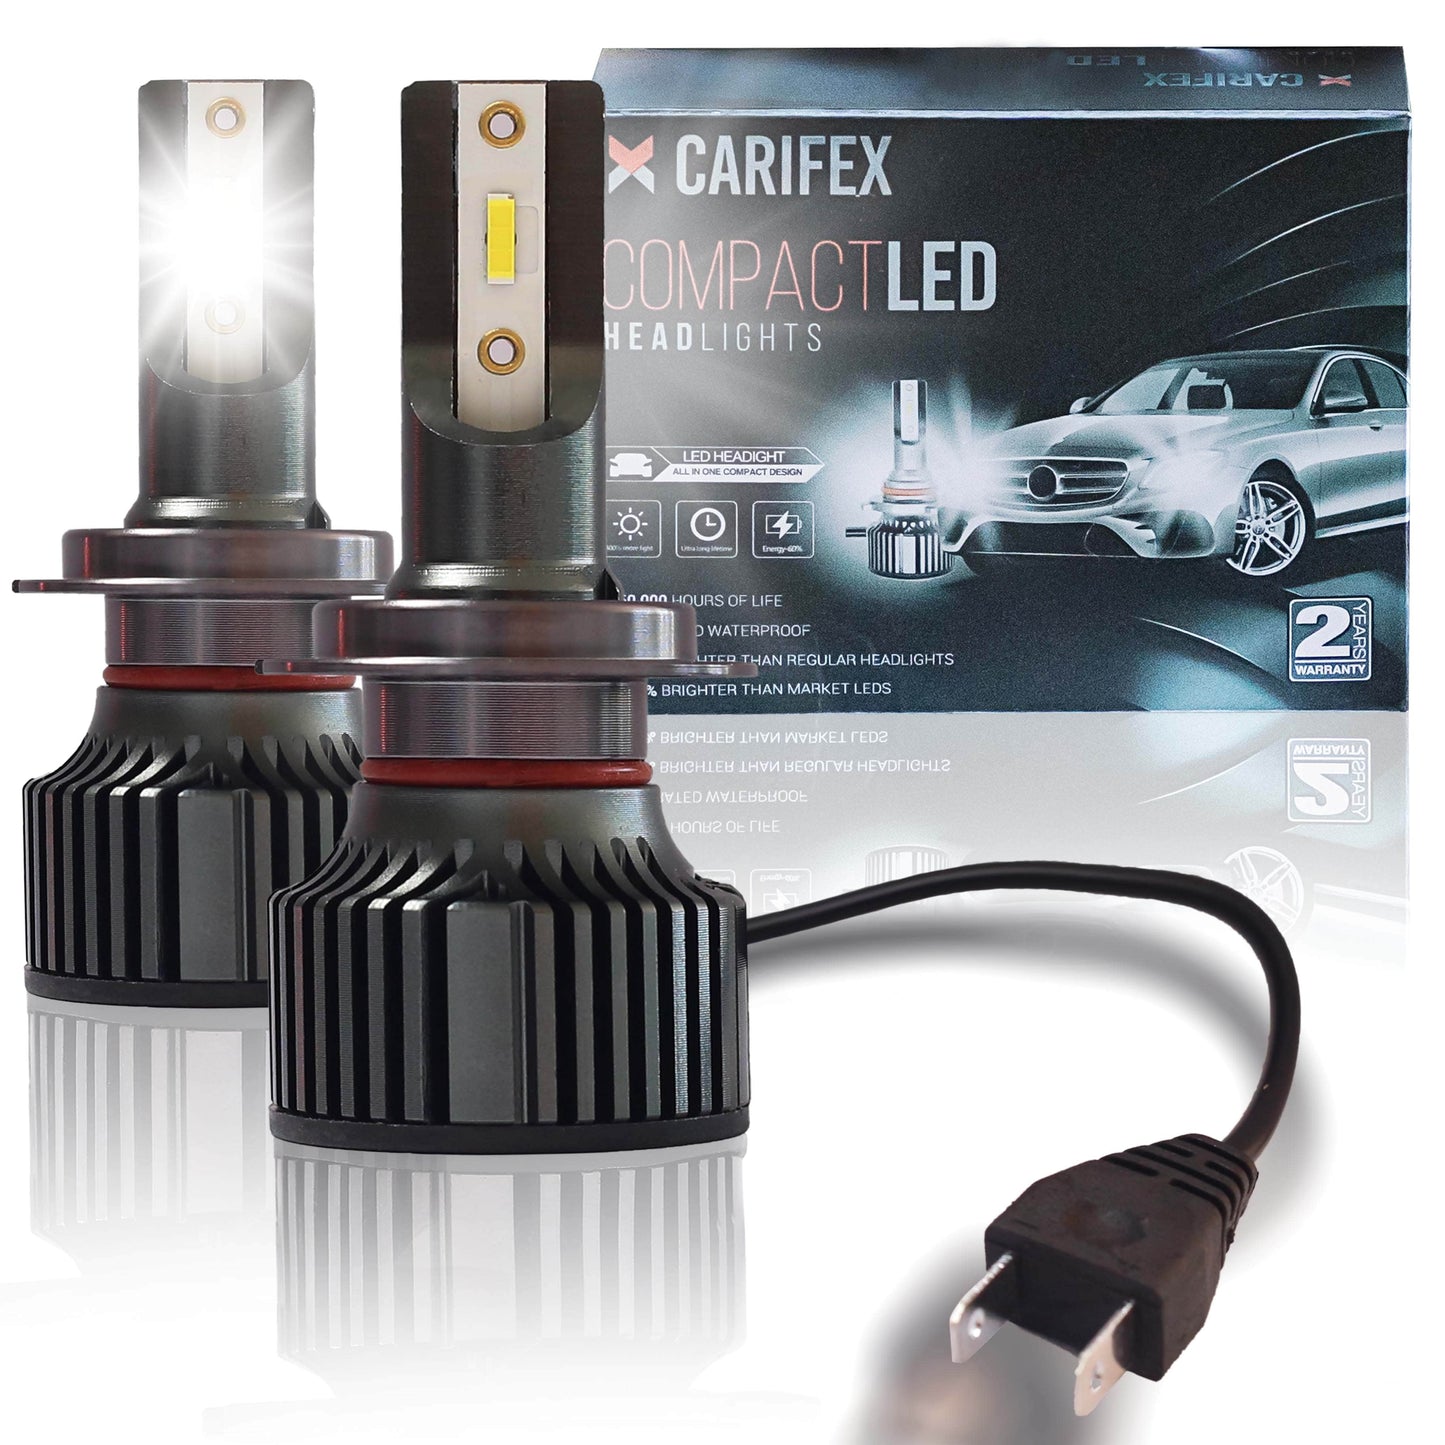 Carifex Compact LED Headlights Compact H7 LED Headlight Bulbs